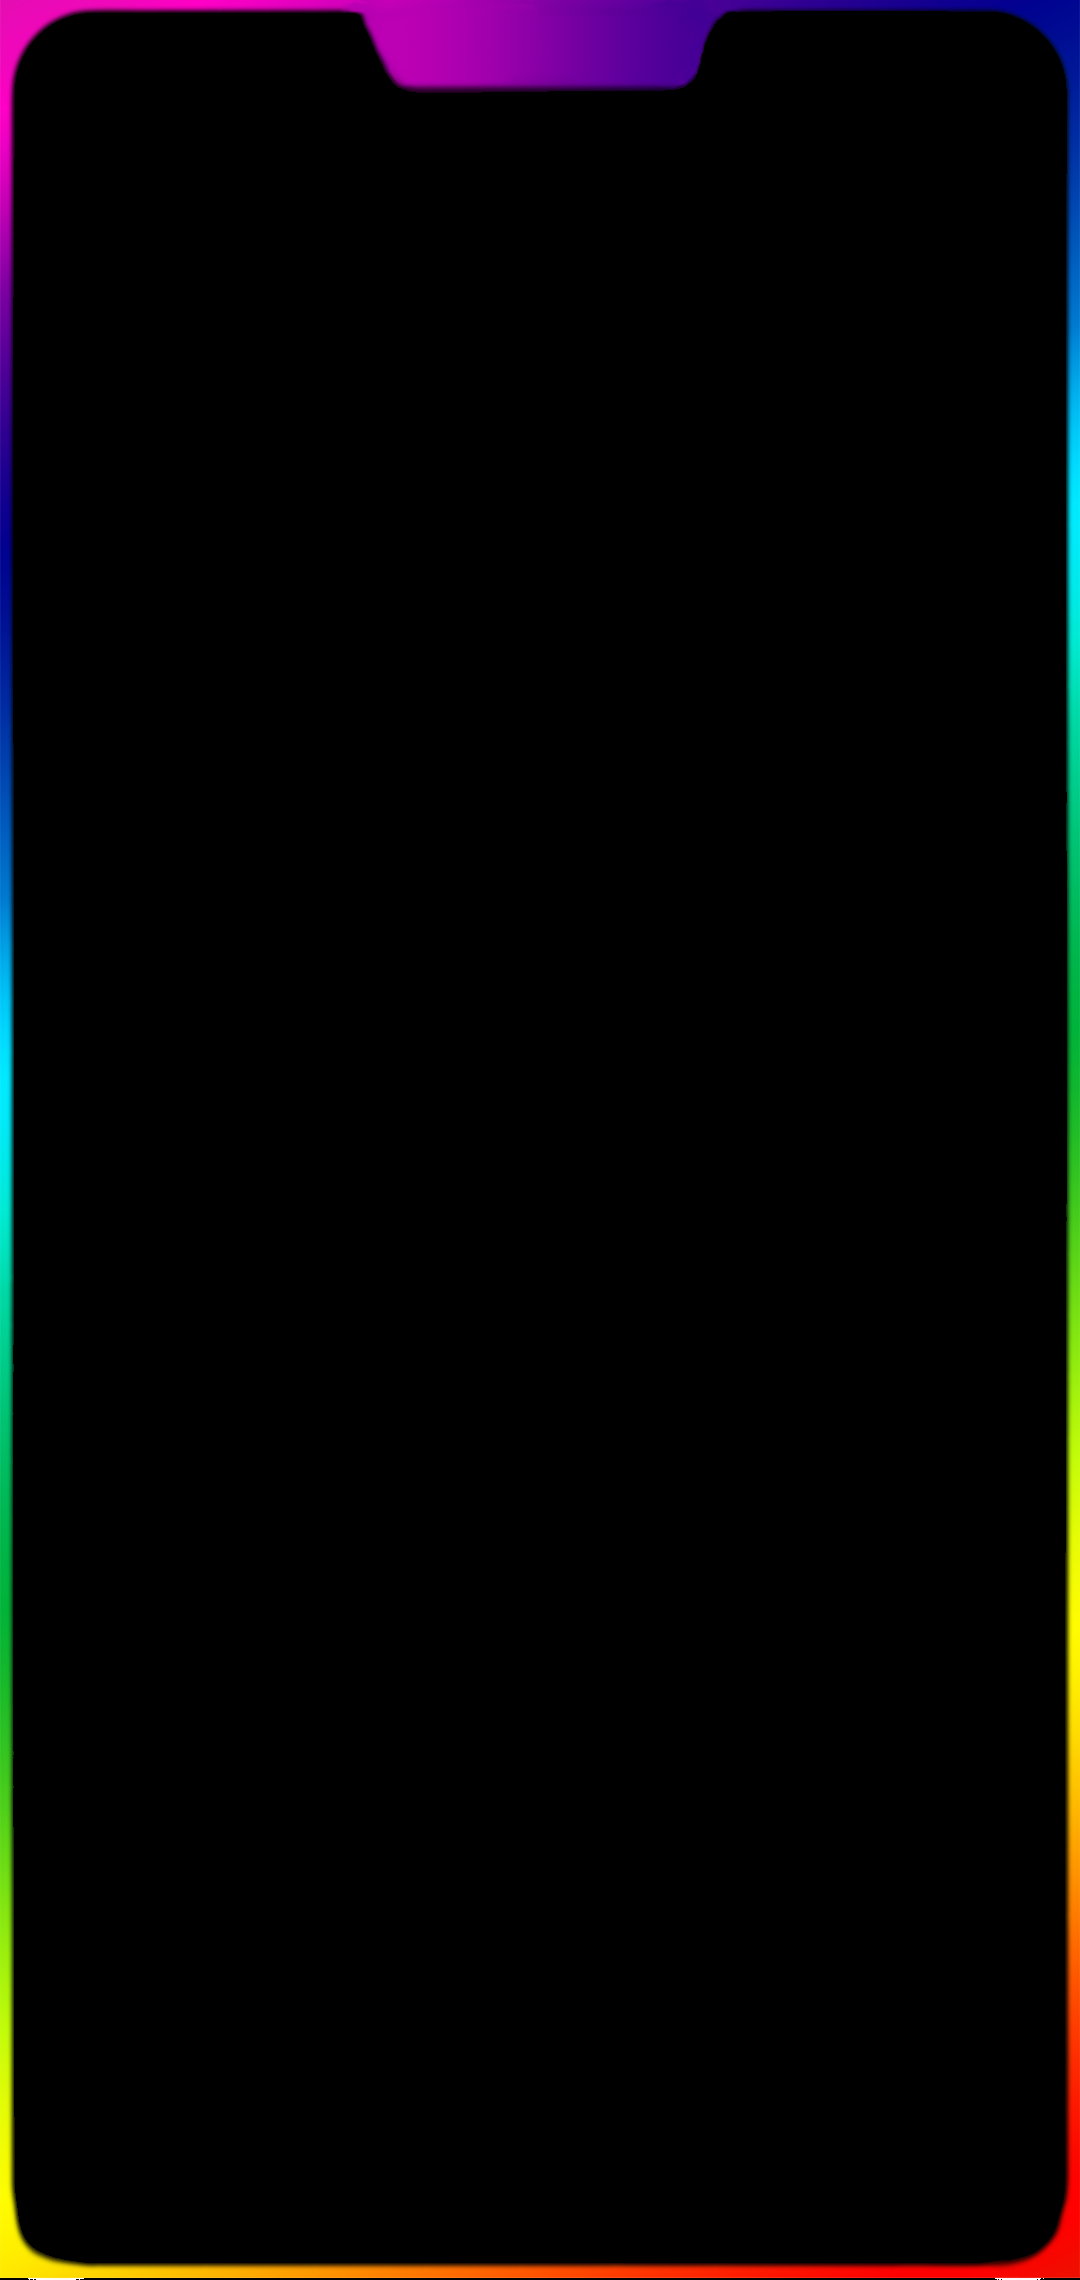 Oneplus 6 Rainbow Border [1080x2280] - Oneplus 6 Rainbow Border , HD Wallpaper & Backgrounds